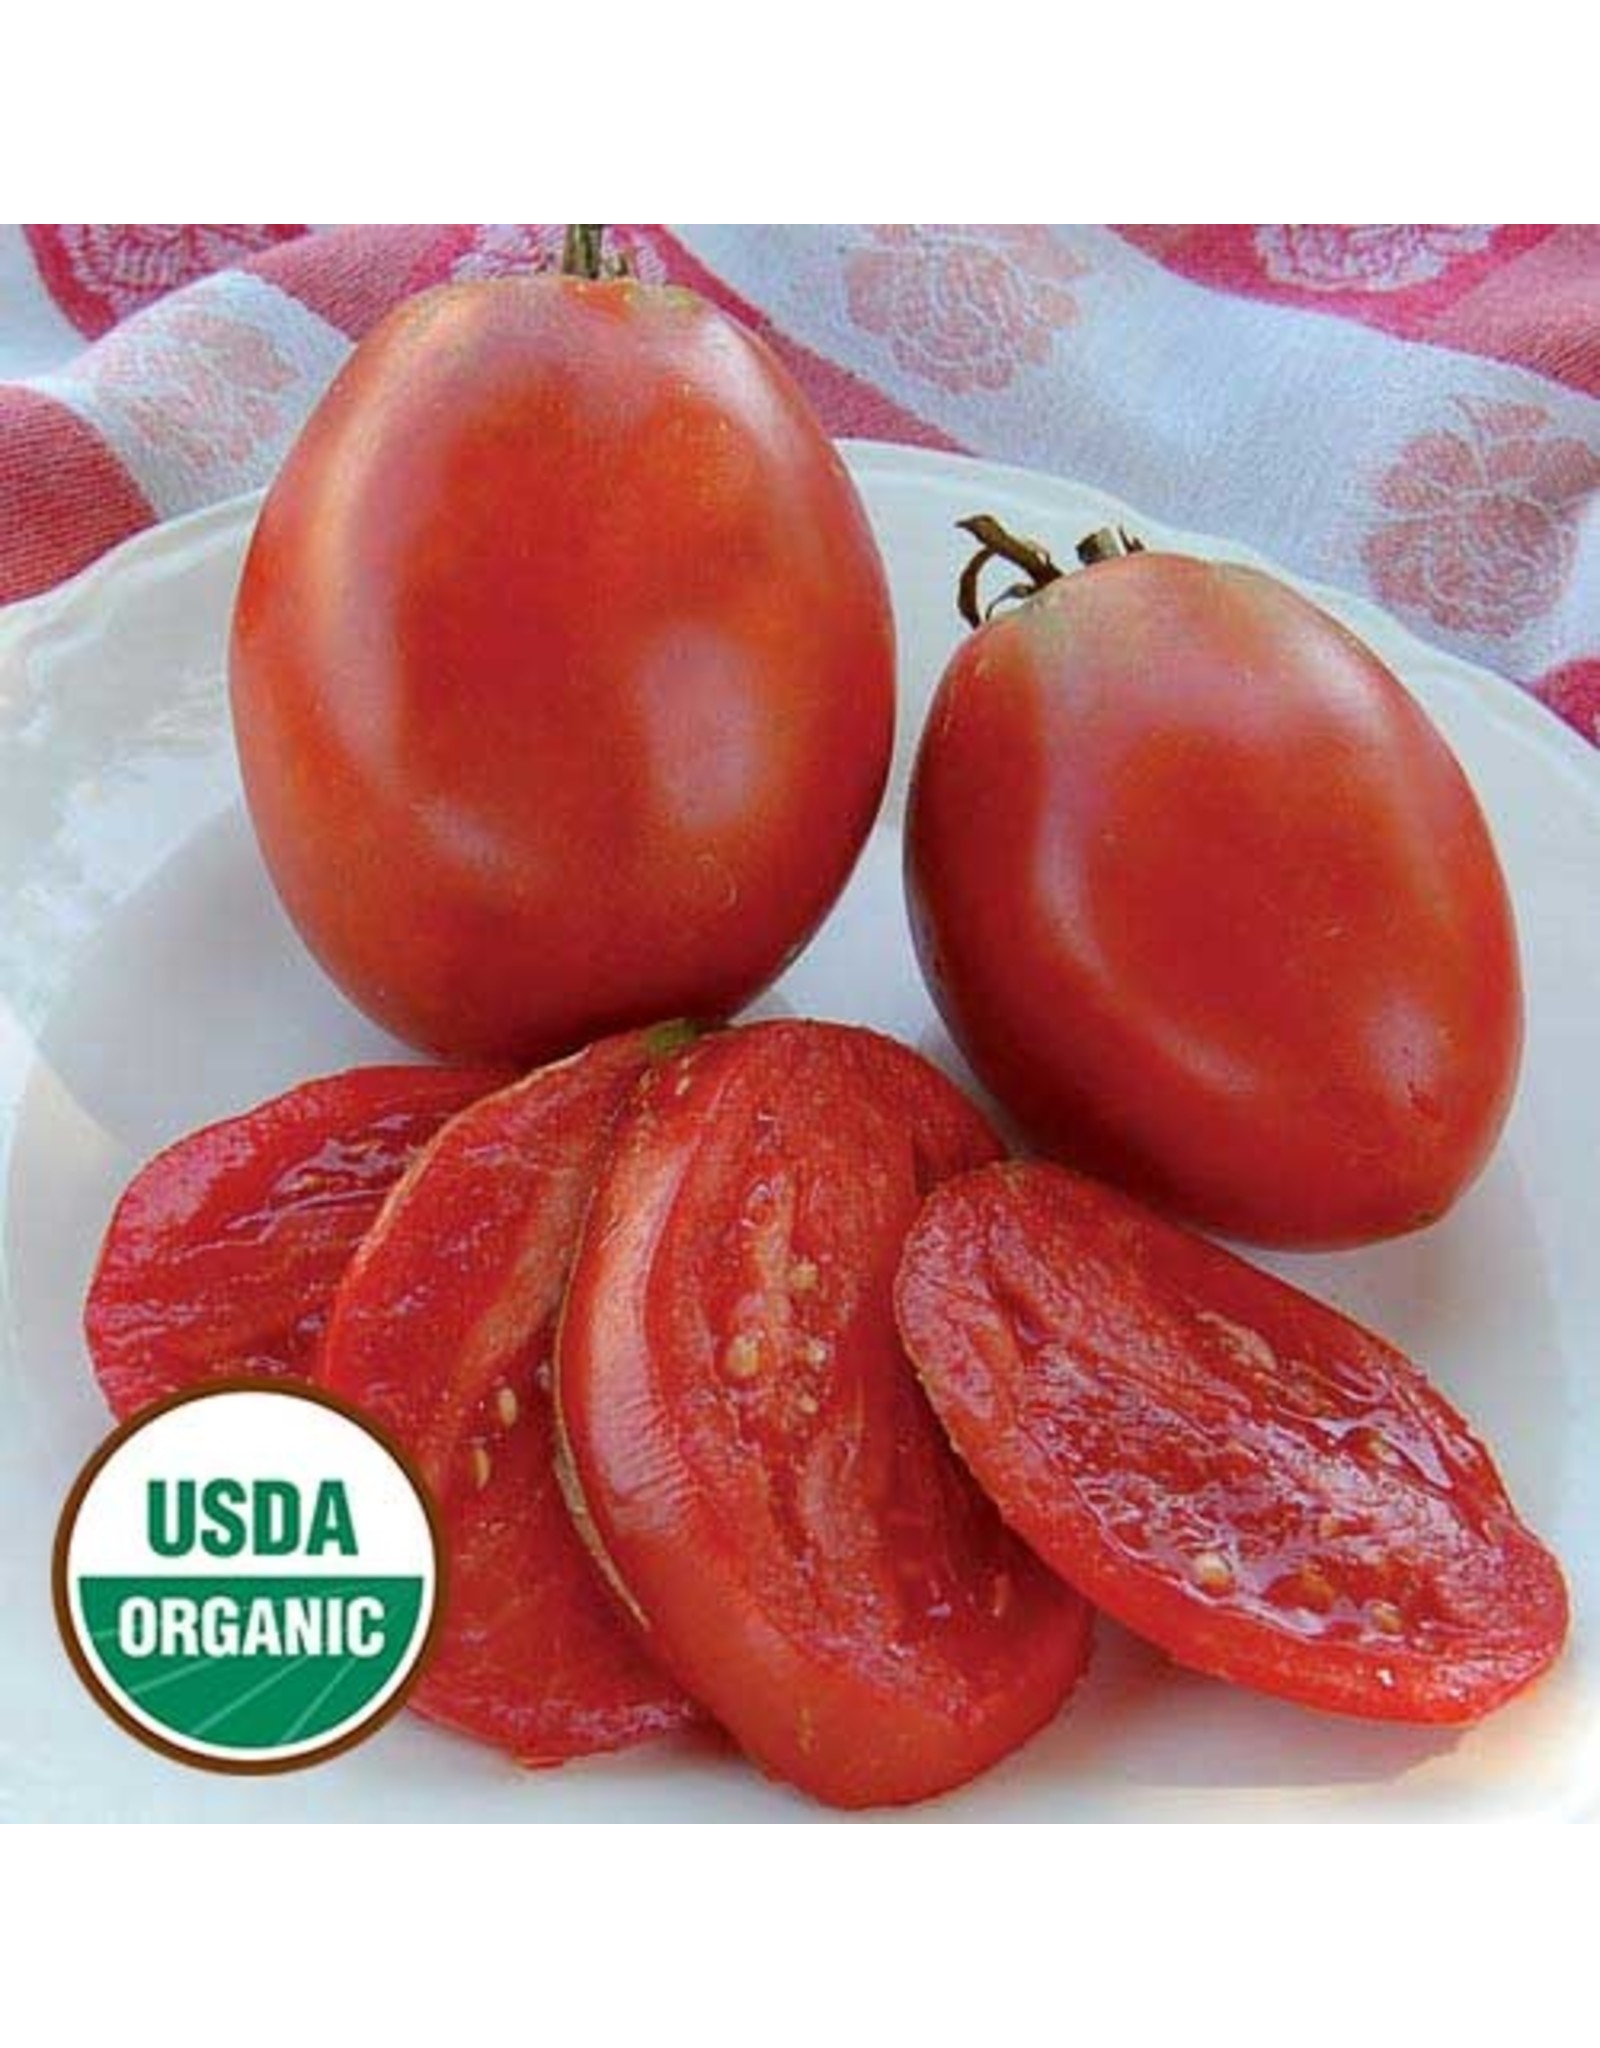 Seed Savers Tomato - Amish Paste (organic)